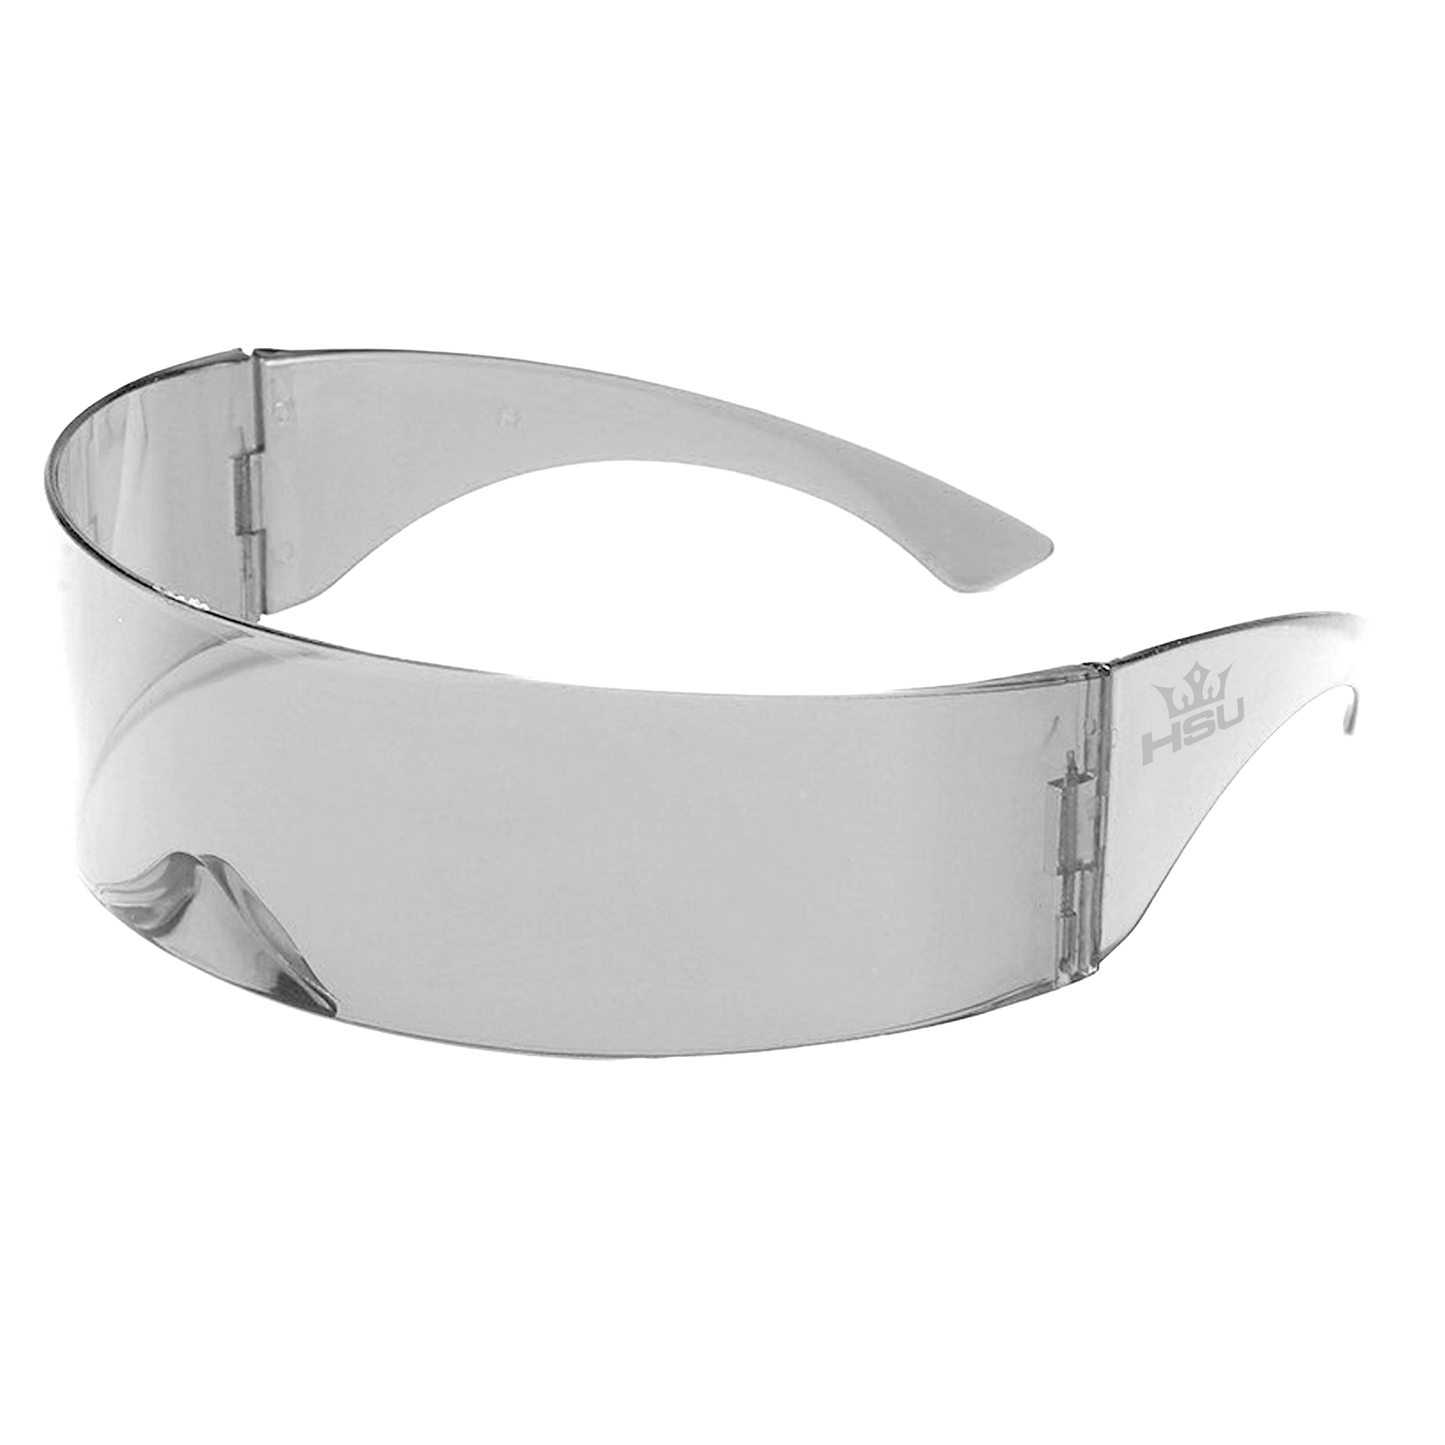 HSU Frameless Sunglasses x Clear